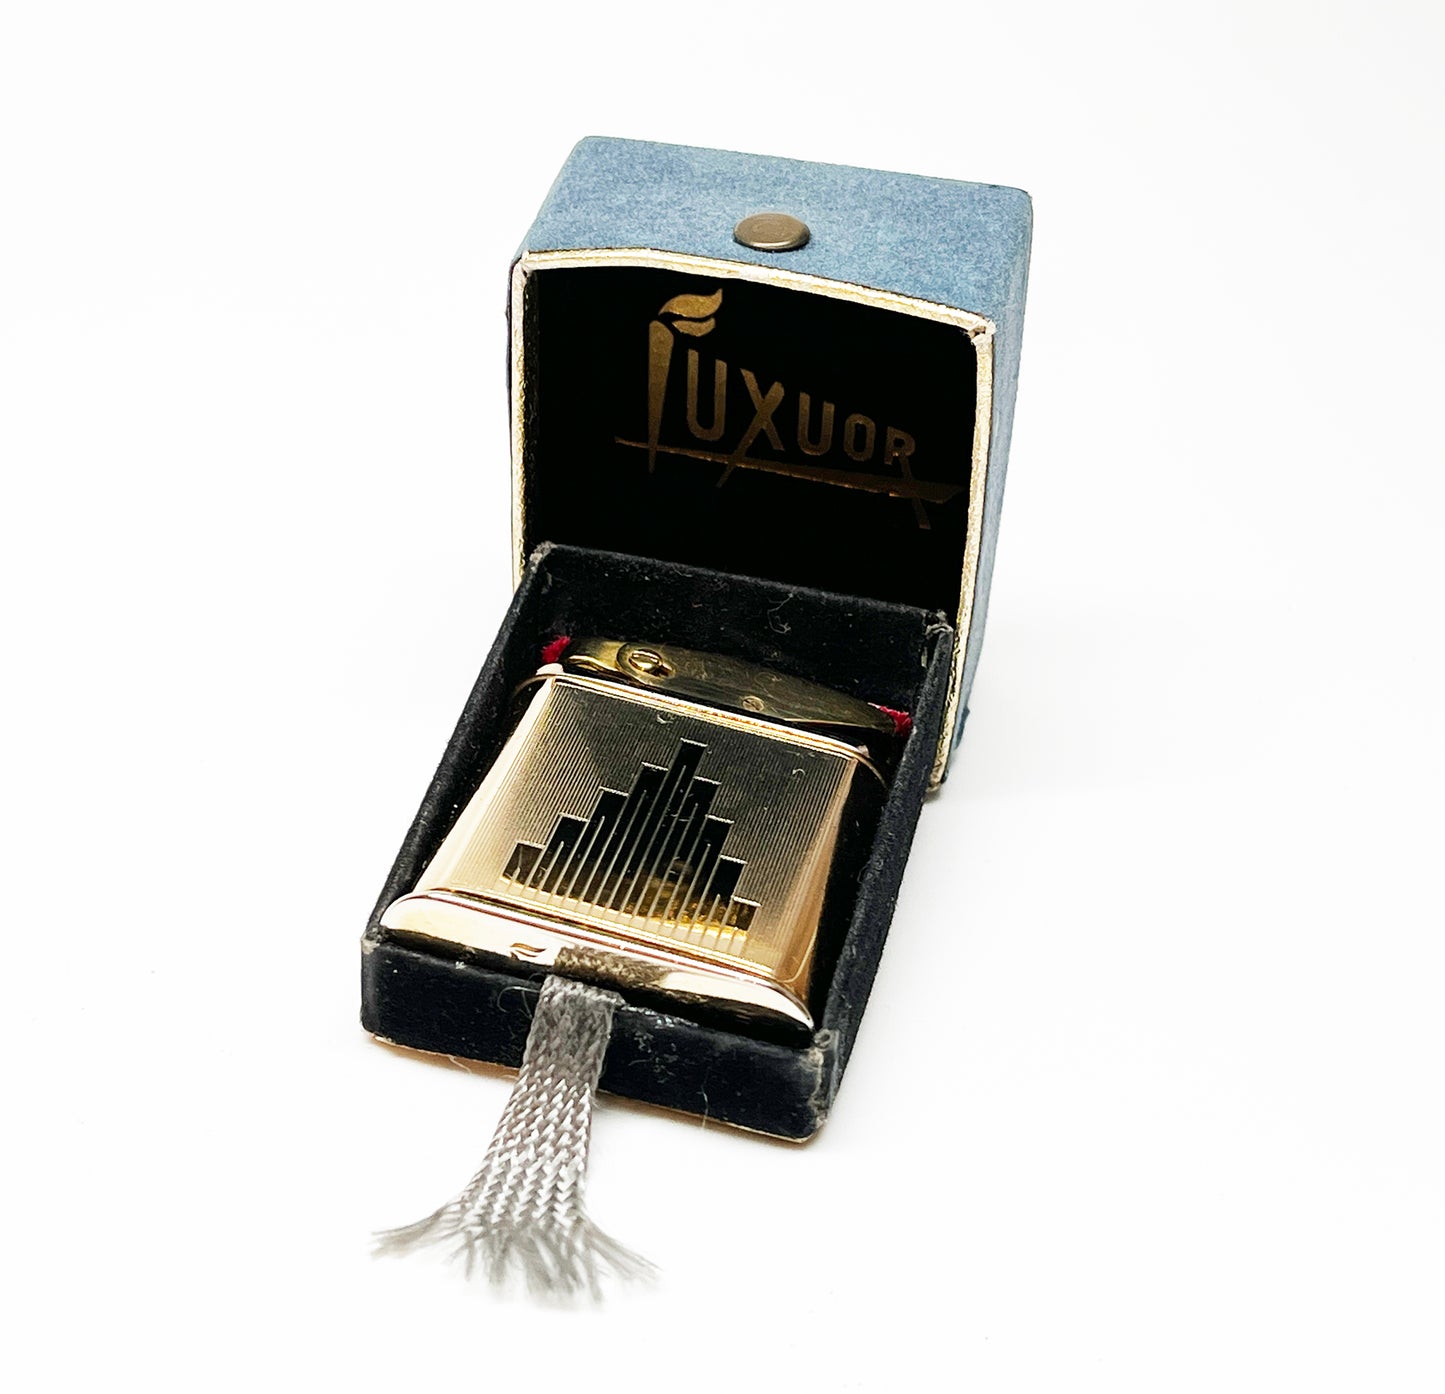 1930s Luxuor French Lighter in Original Box